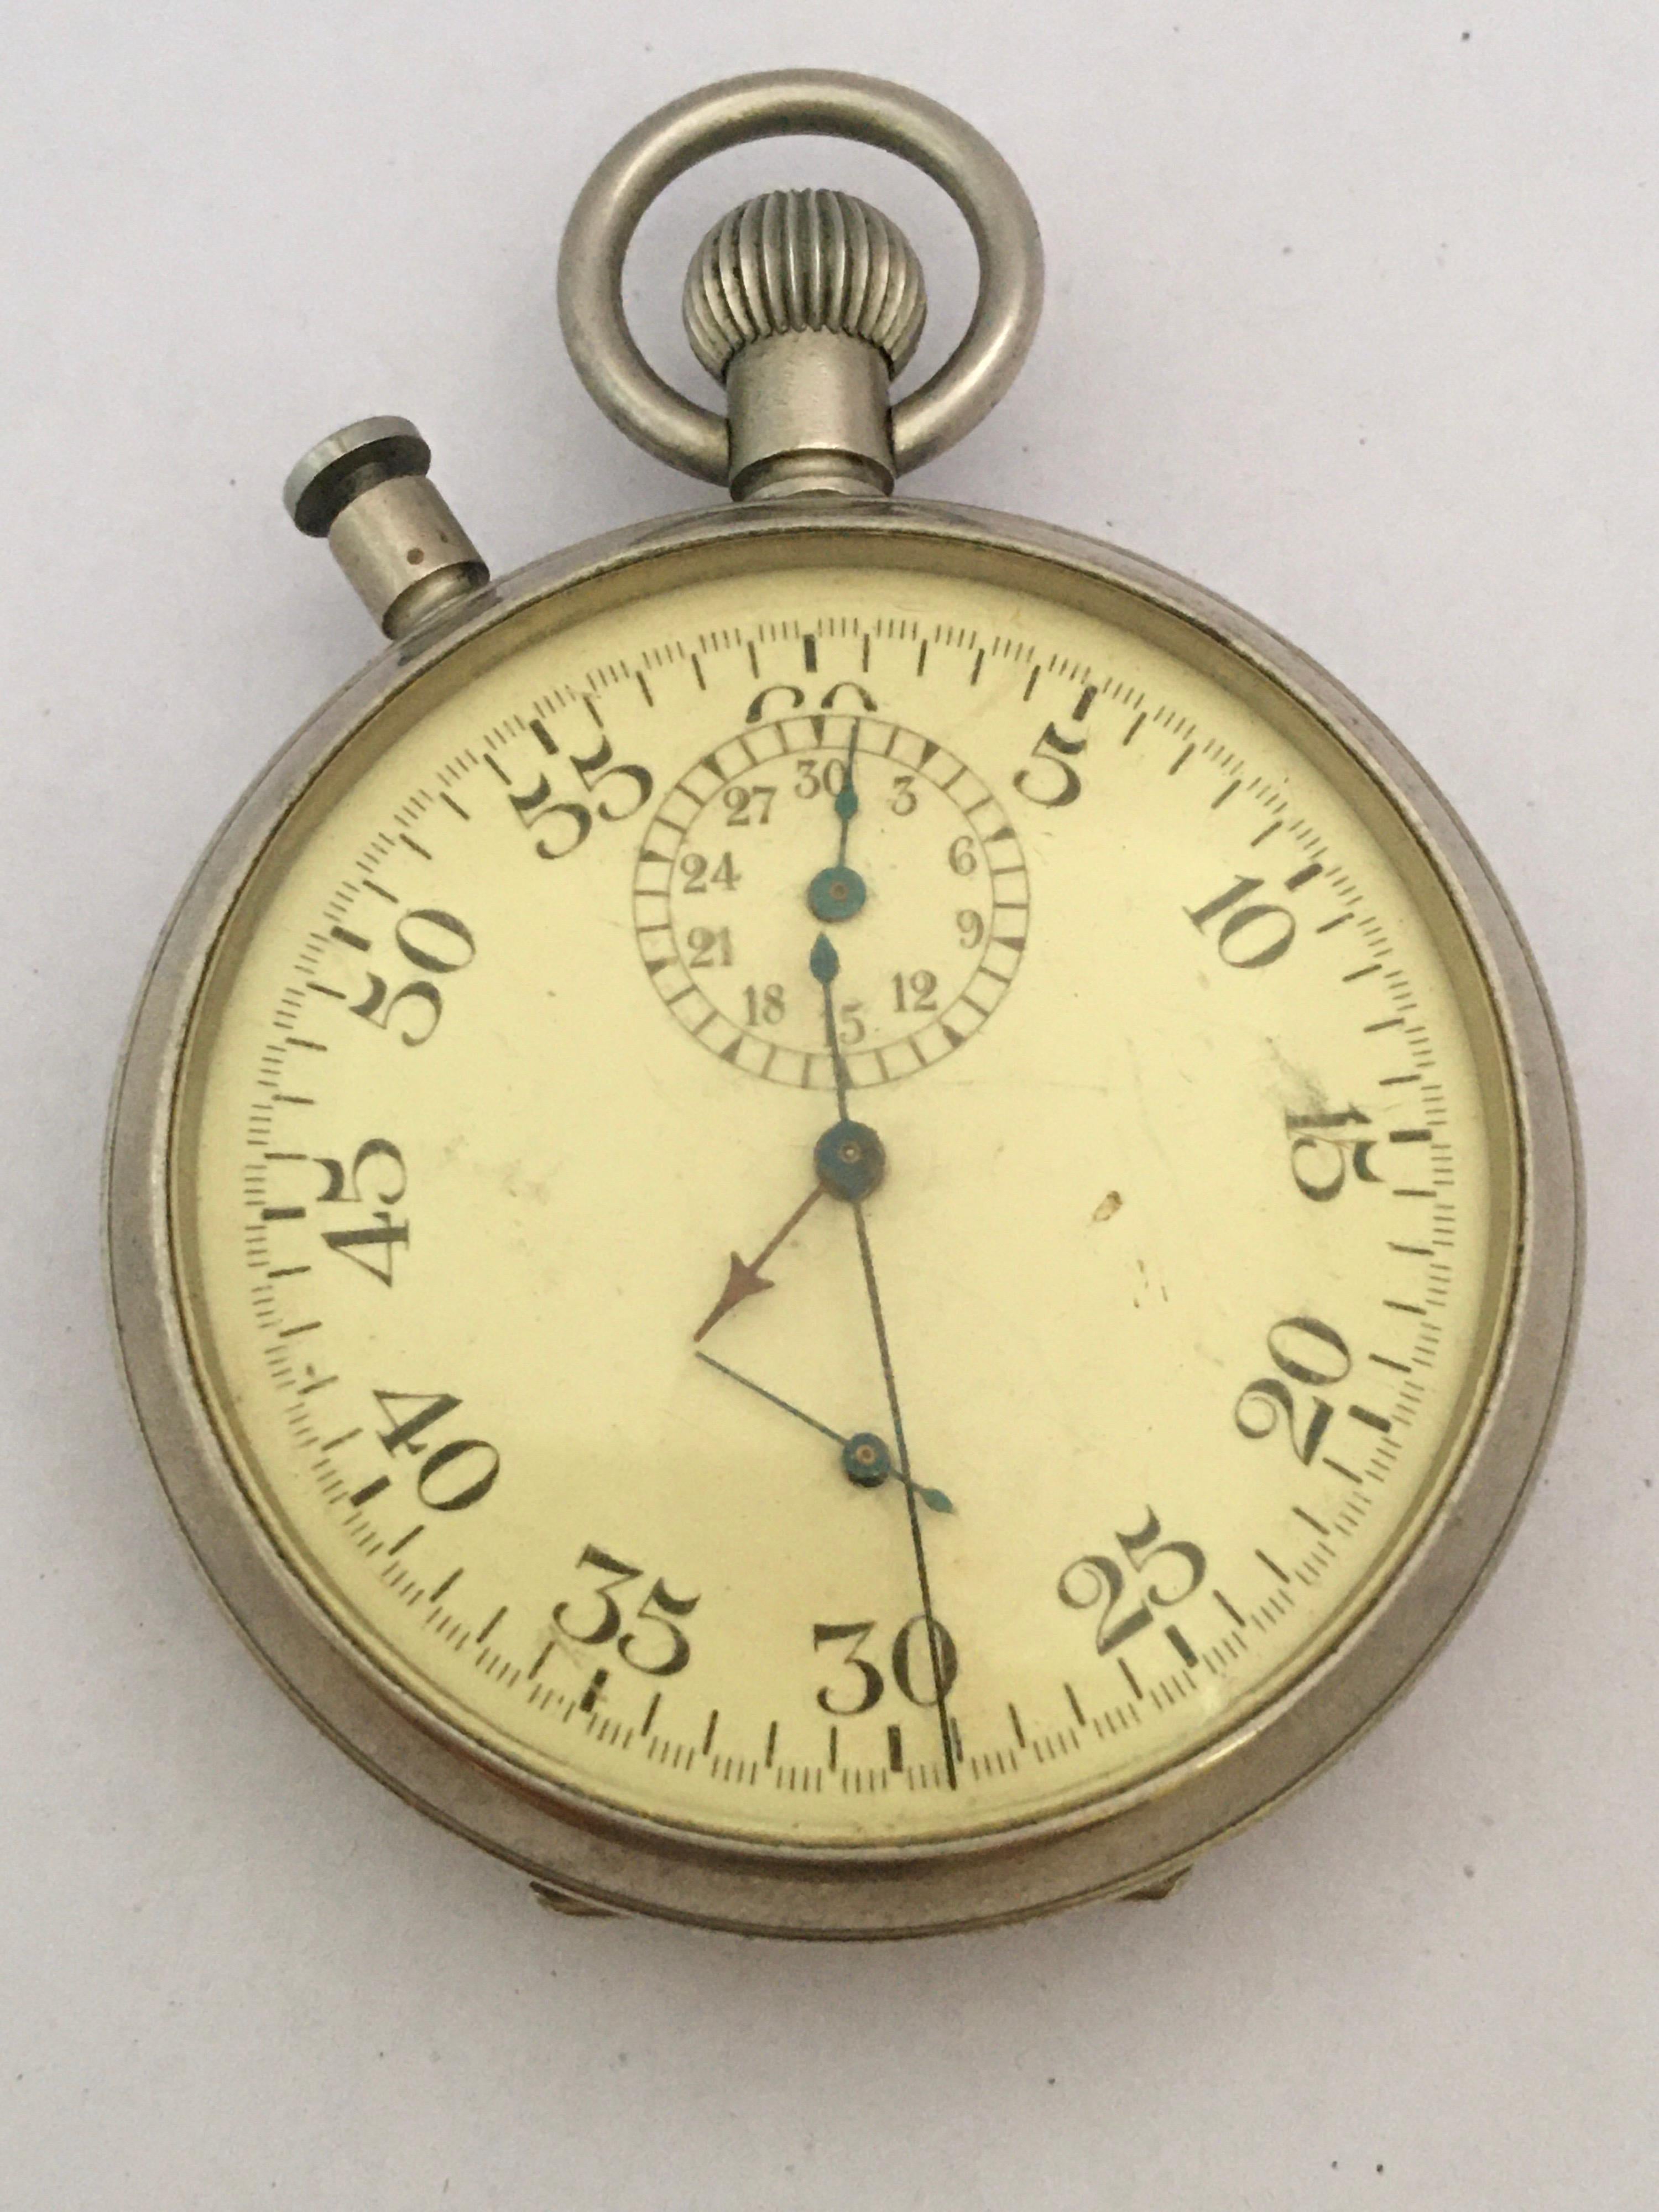 Rare 1940s Military Chronograph Stopwatch with Split-Seconds PATT. 4 No. 11643 6